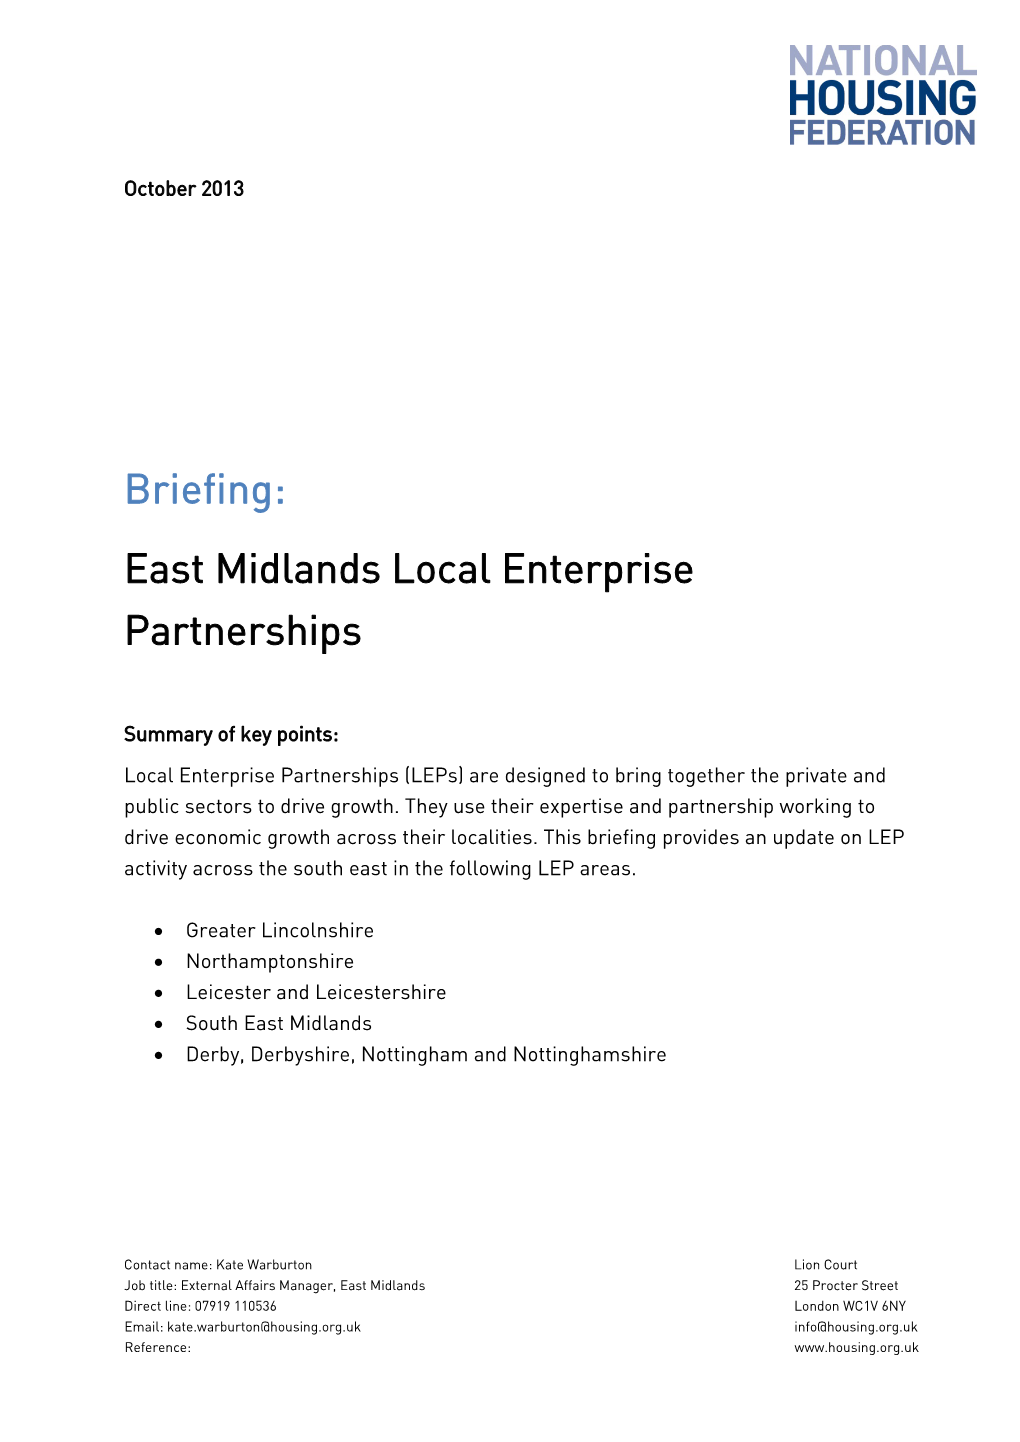 Briefing: East Midlands Local Enterprise Partnerships